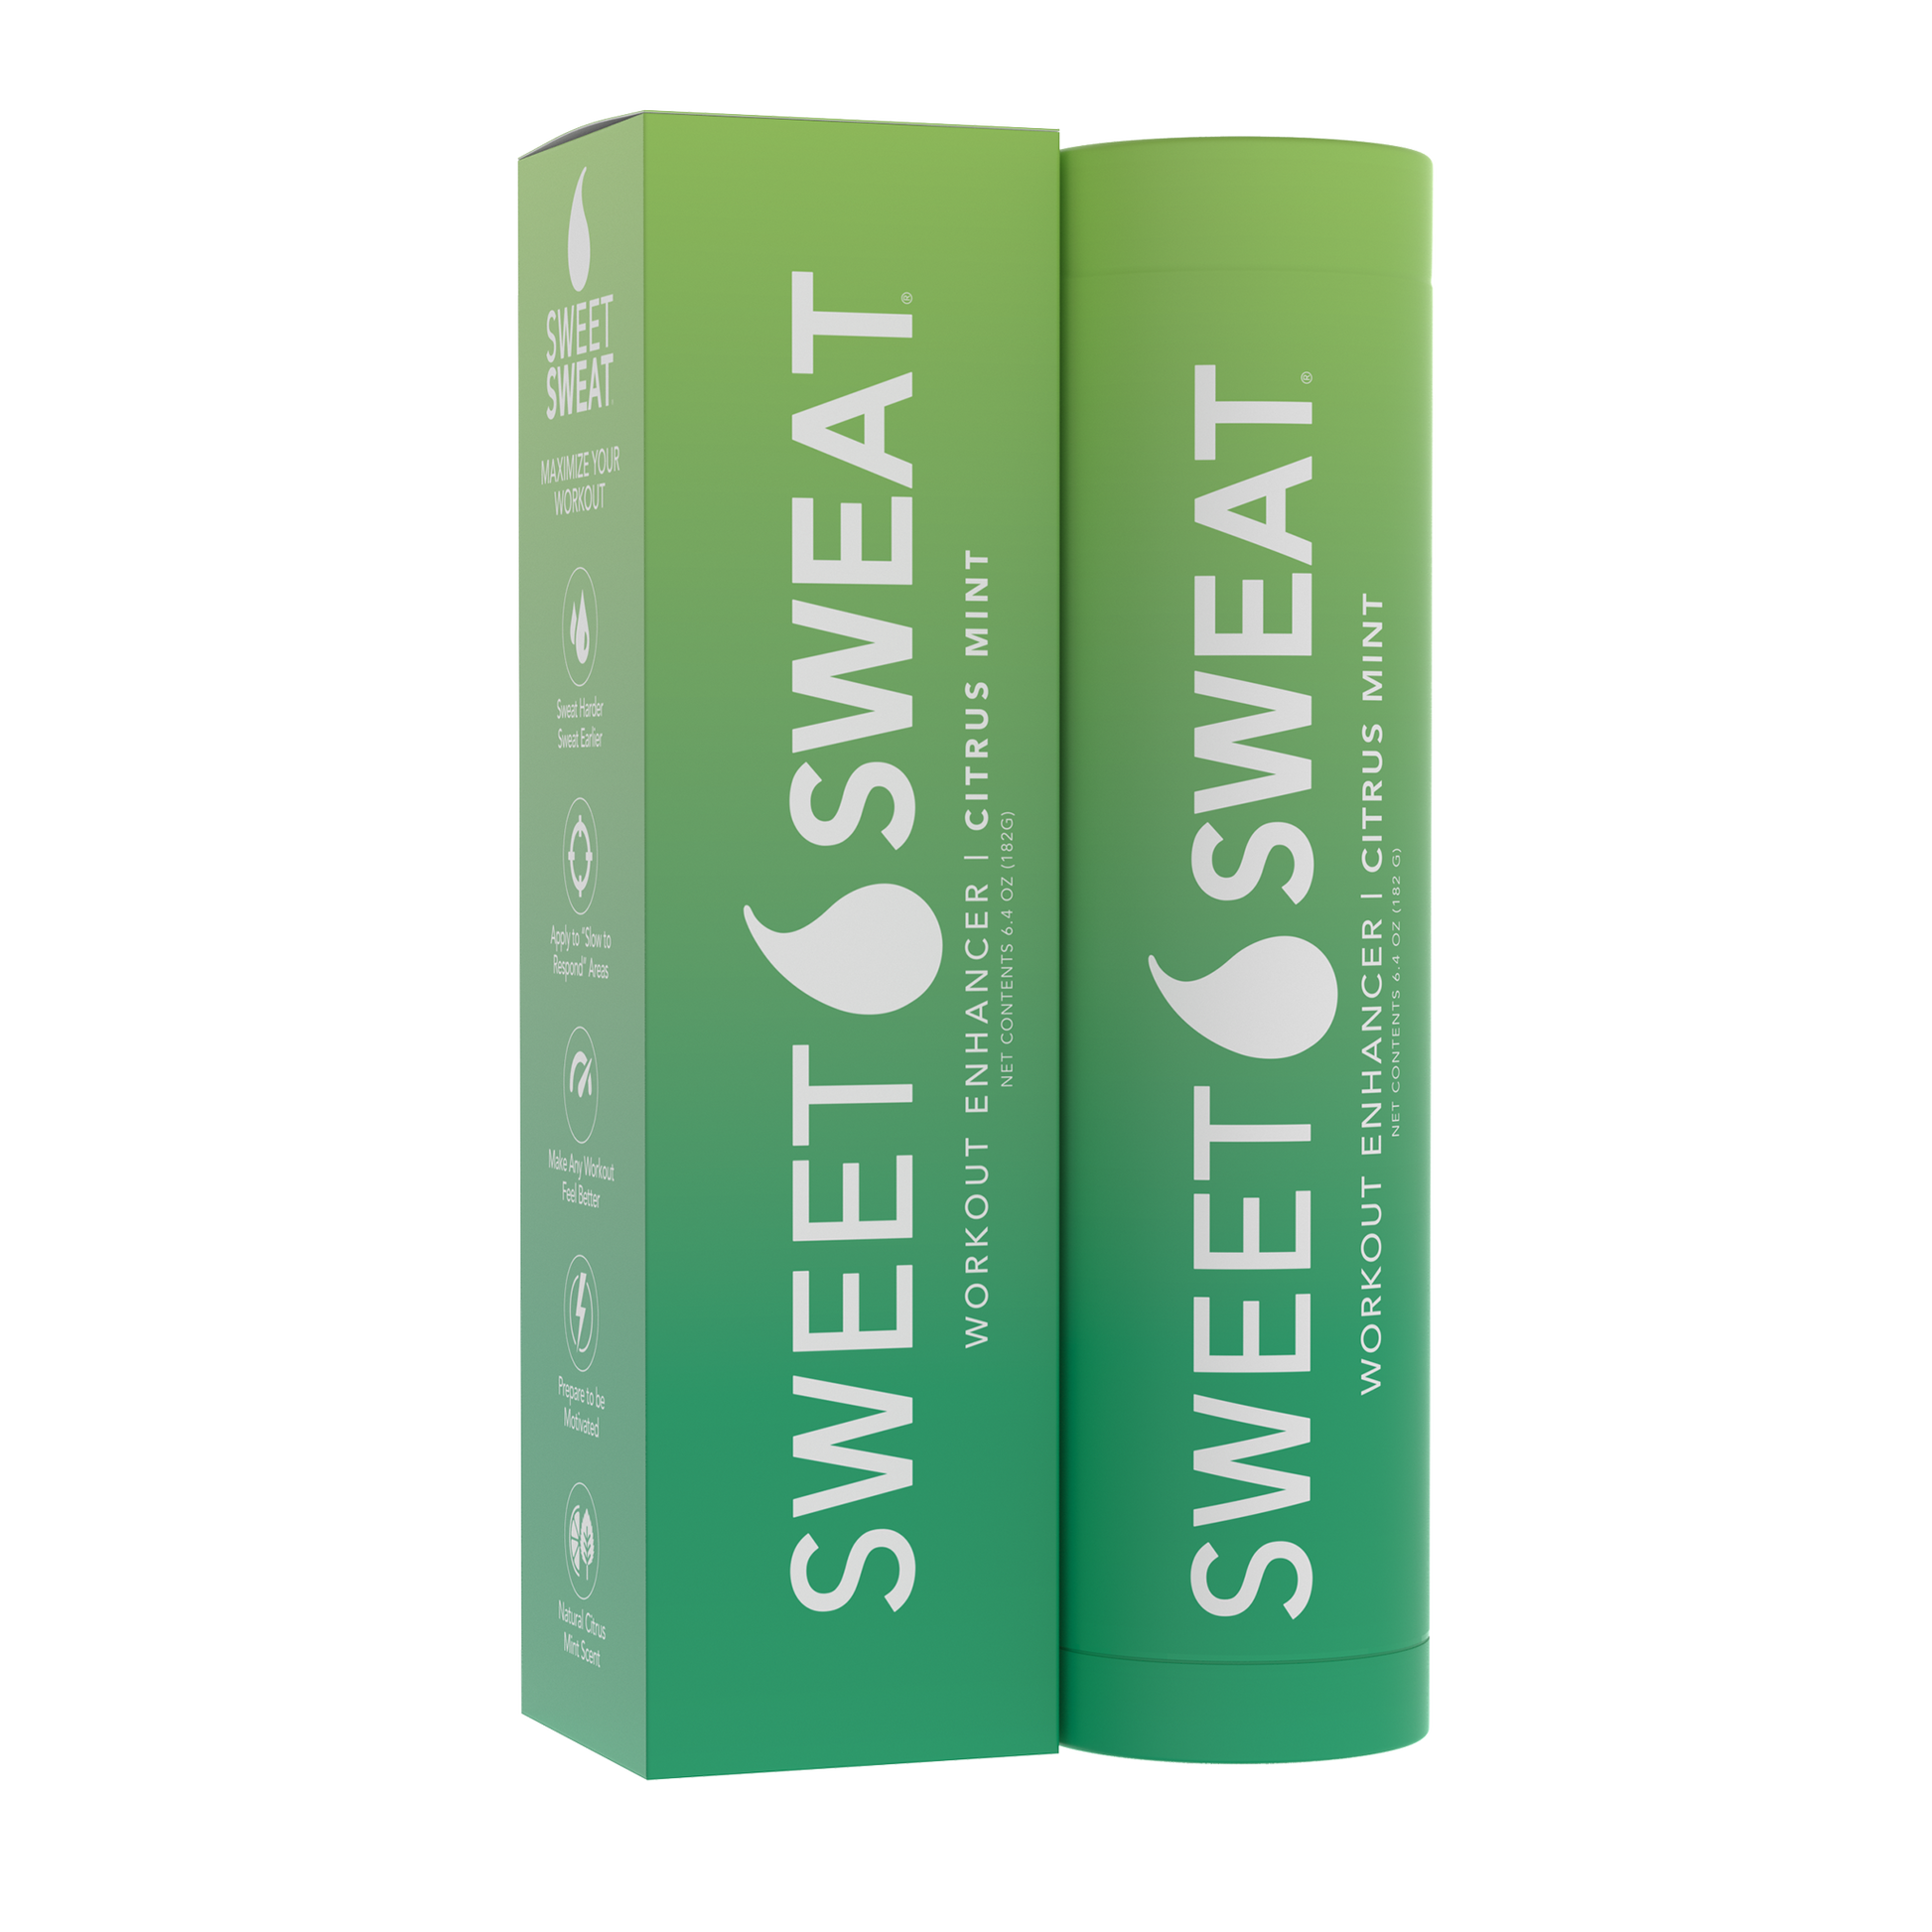 A box of Sweet Sweat® Stick 6.4 oz - Citrus Mint on a white background.